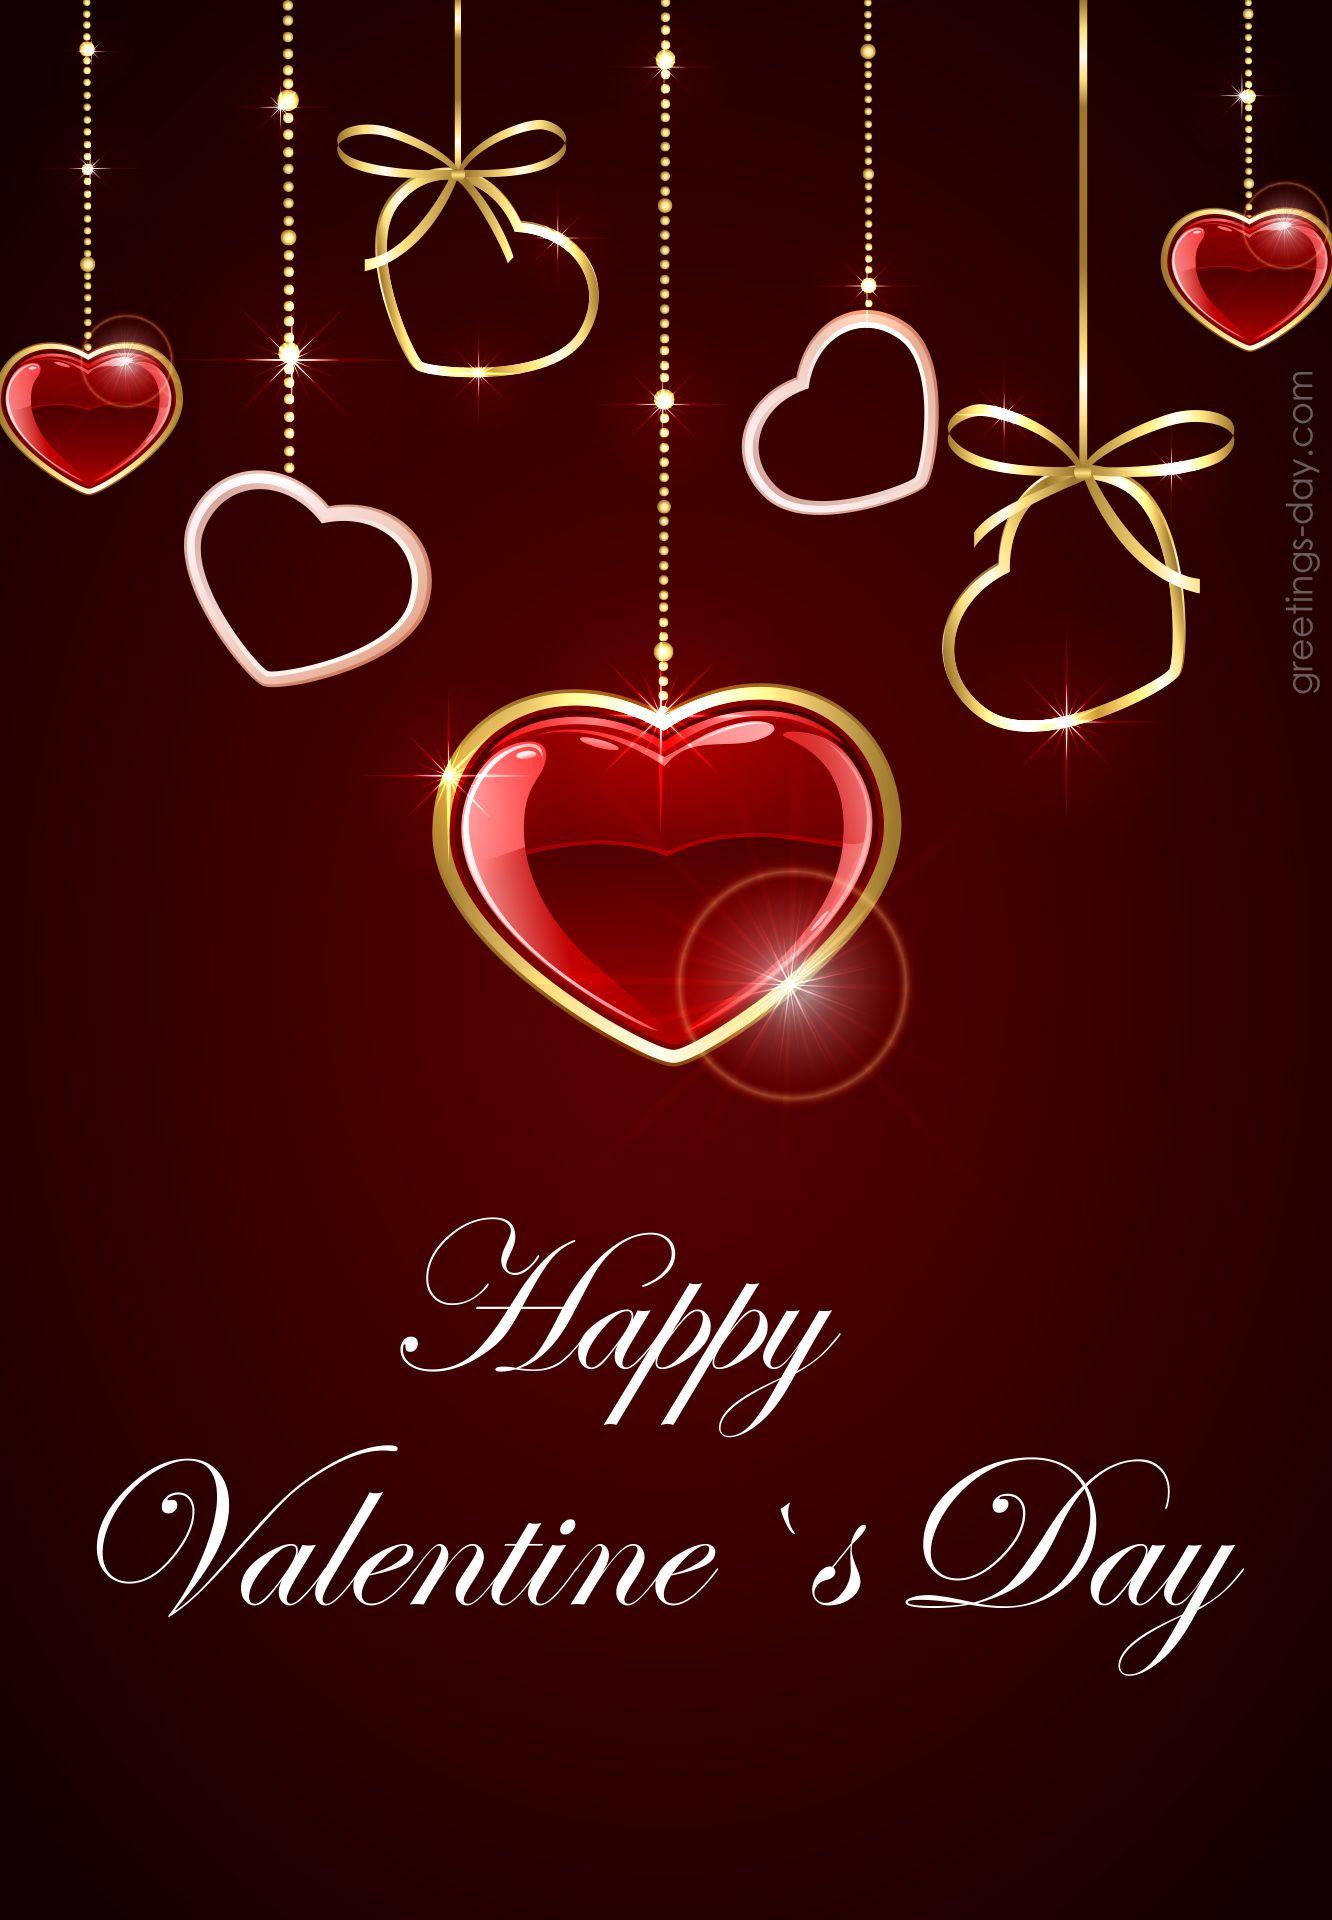 Valentine's Day Love & Hugs!. Happy valentines day photo, Happy valentines day image, Happy valentines day wishes